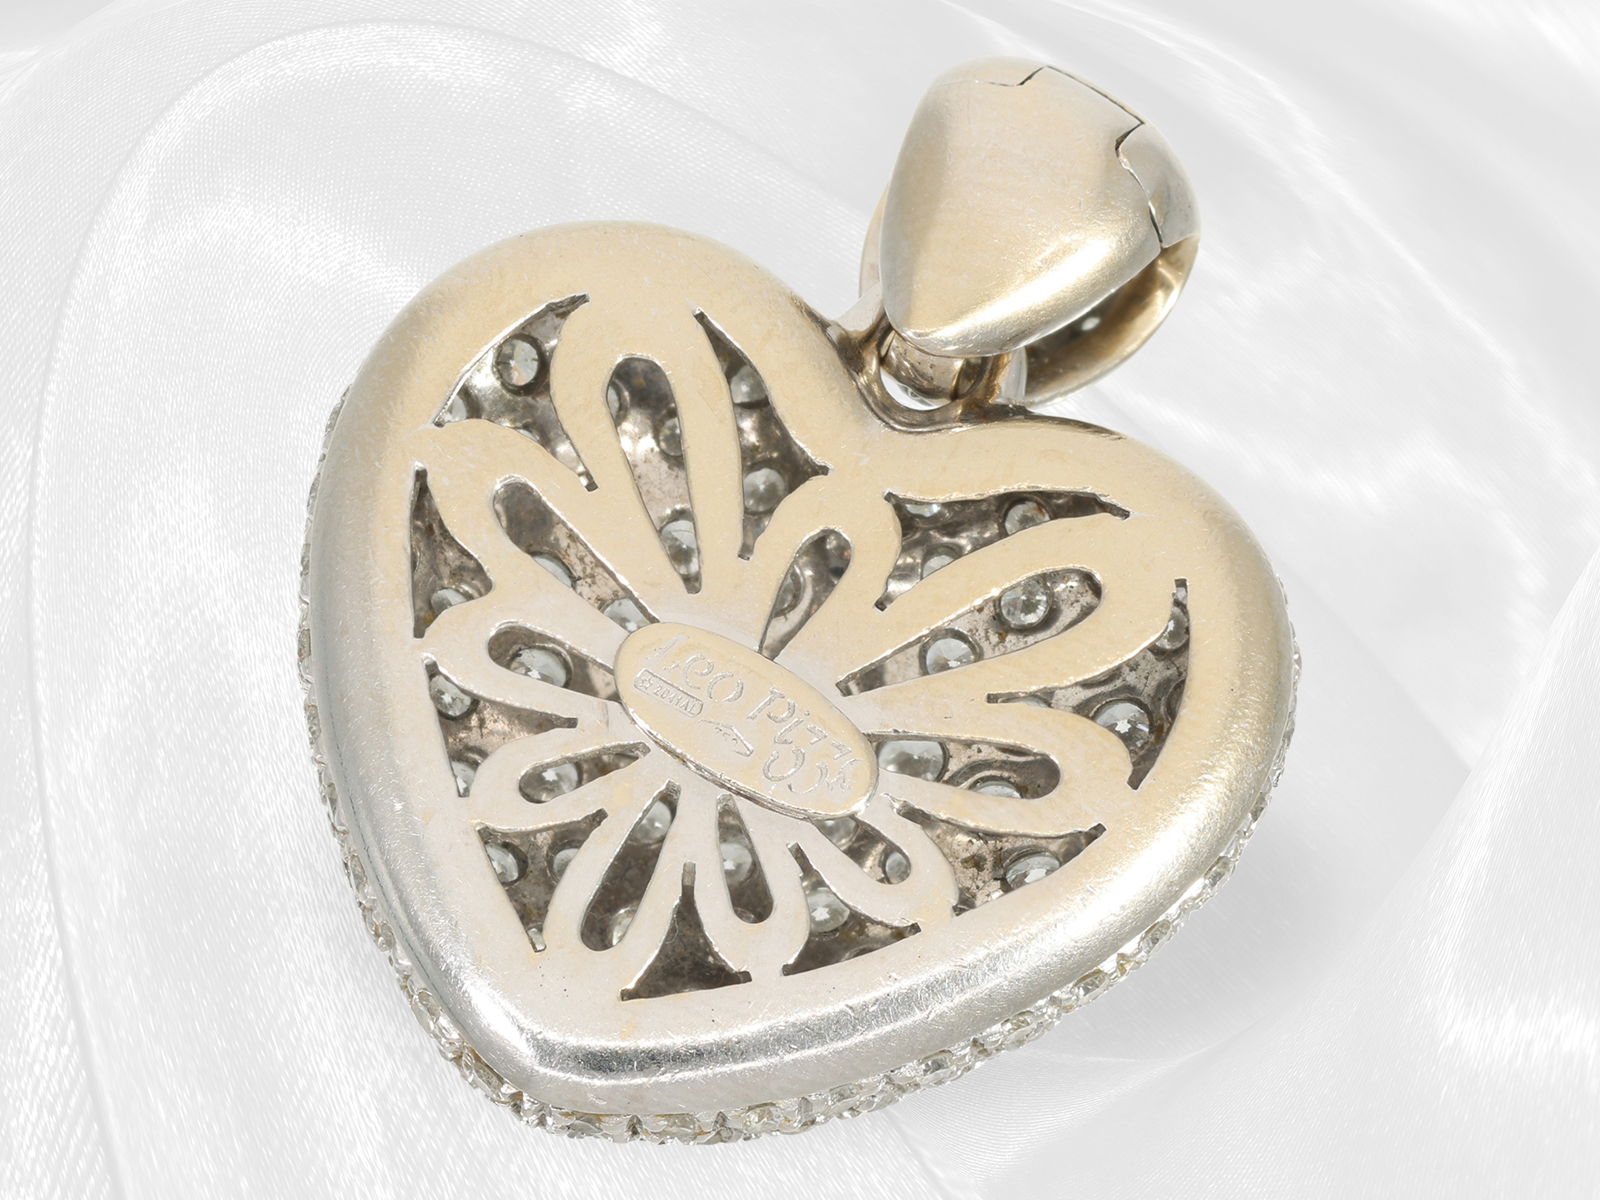 Italian richly set brilliant-cut diamond heart pendant, approx. 4ct brilliant-cut diamonds - Image 7 of 8